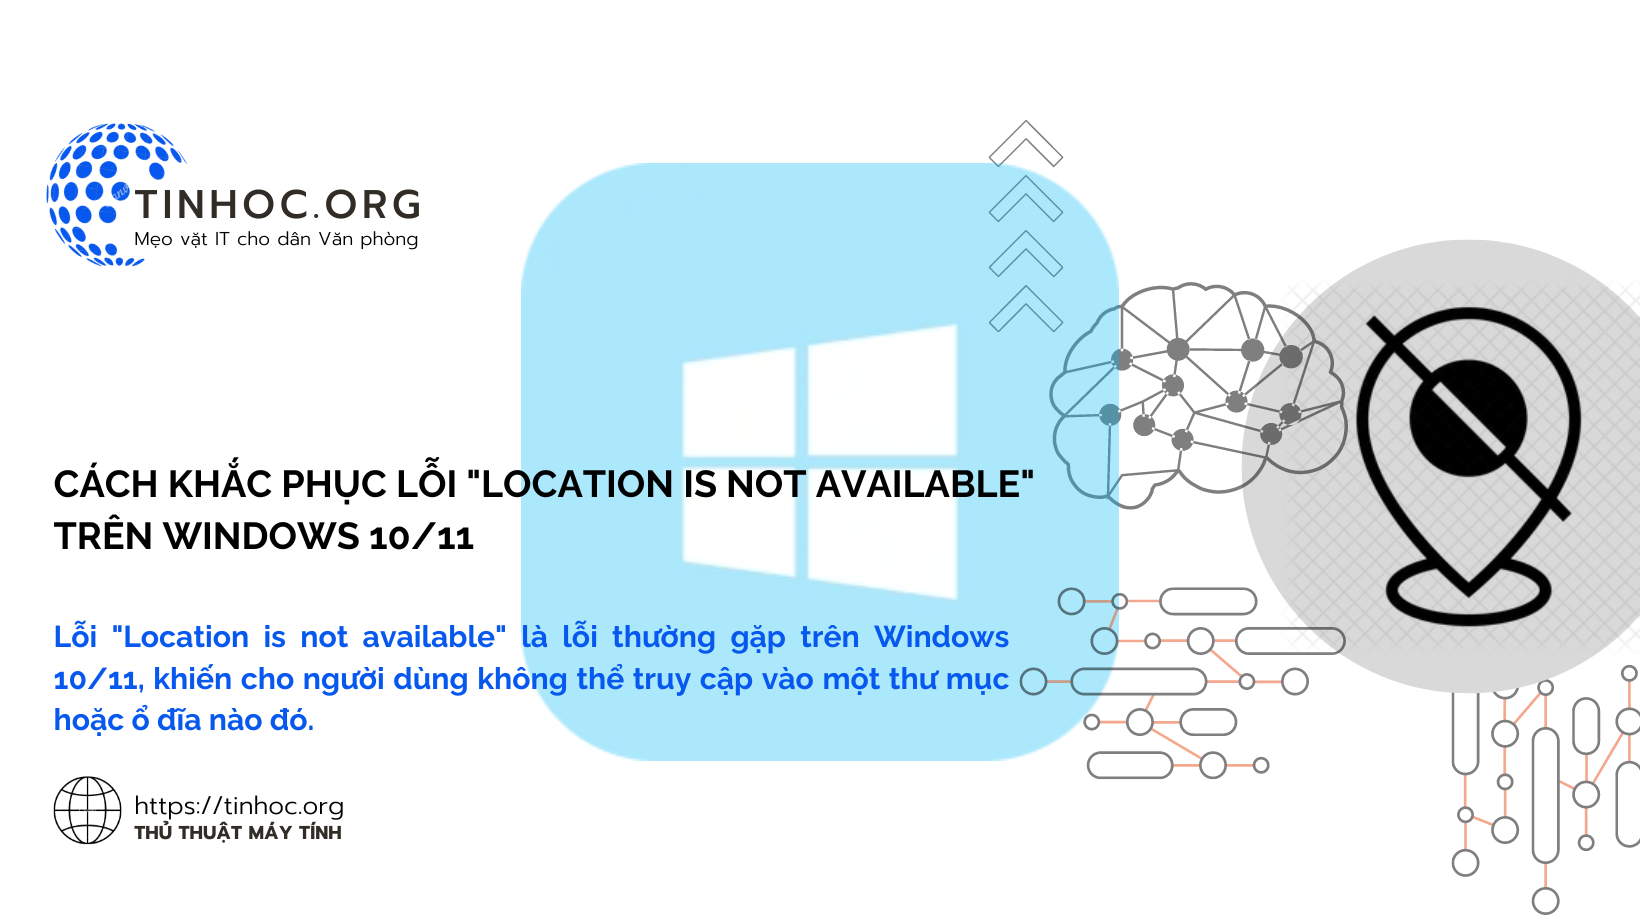 Cách khắc phục lỗi "Location is not available" trên Windows 10/11